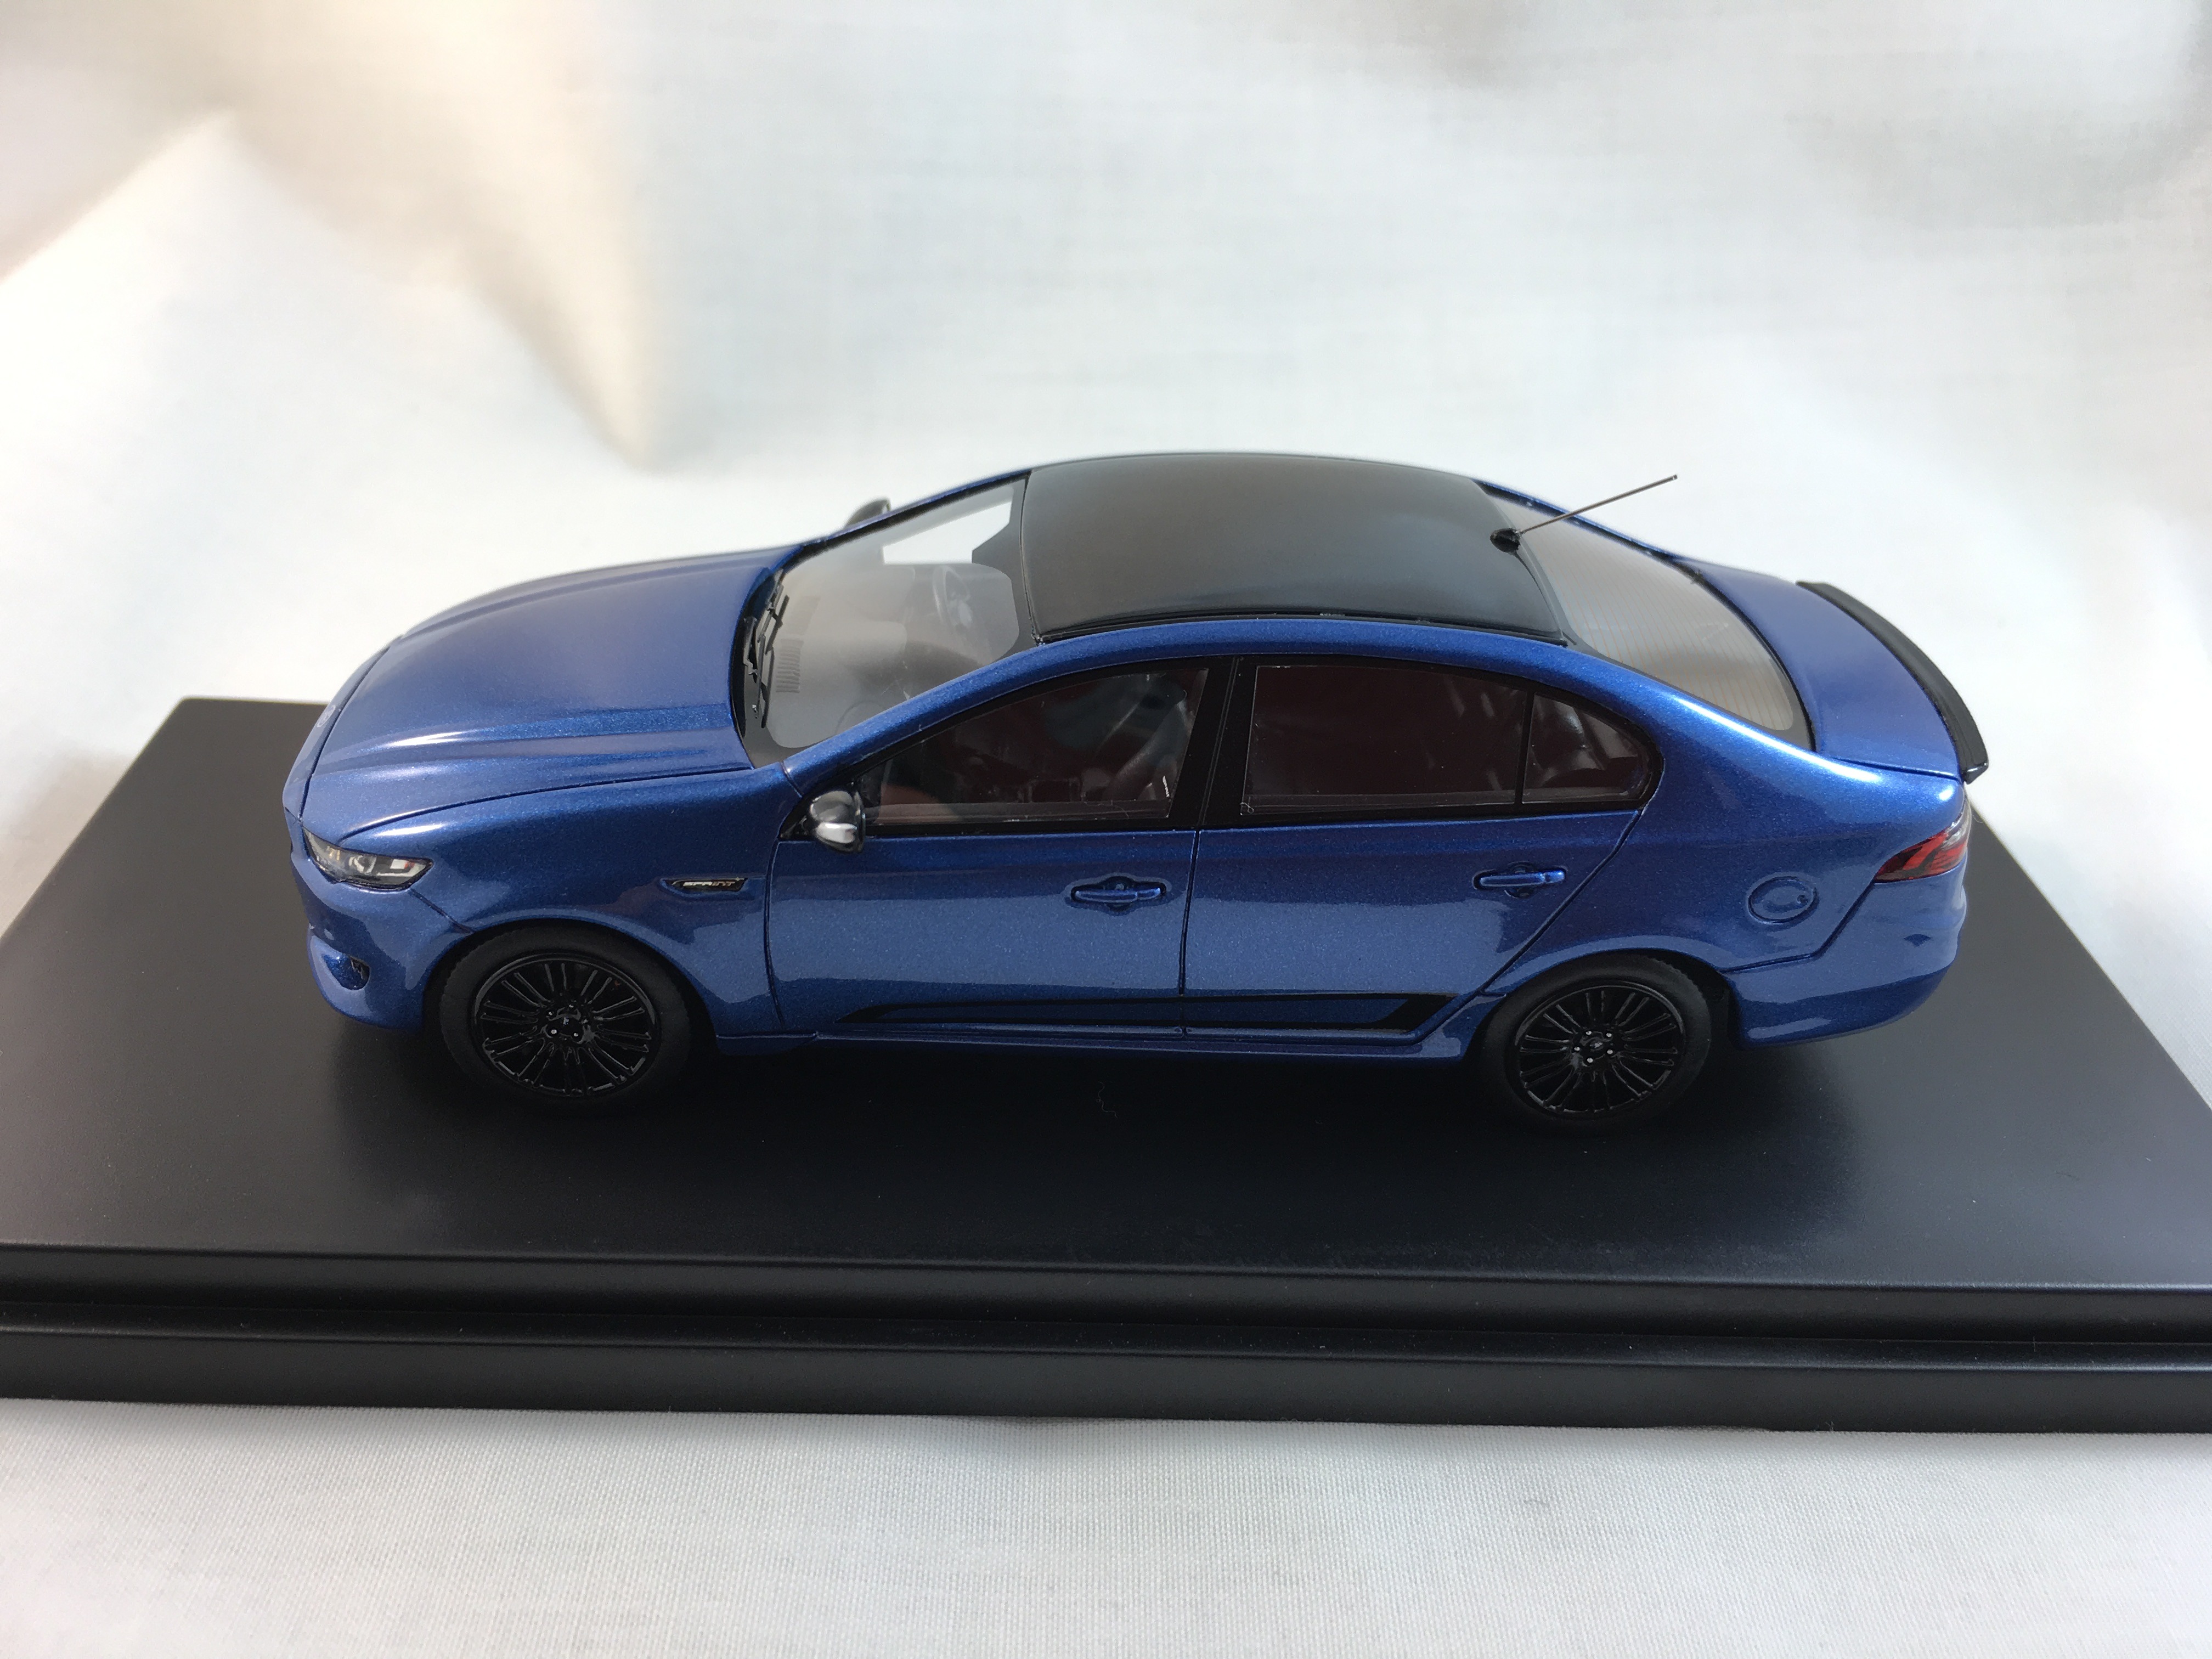 Ford Falcon XR8 Sprint – Kinetic